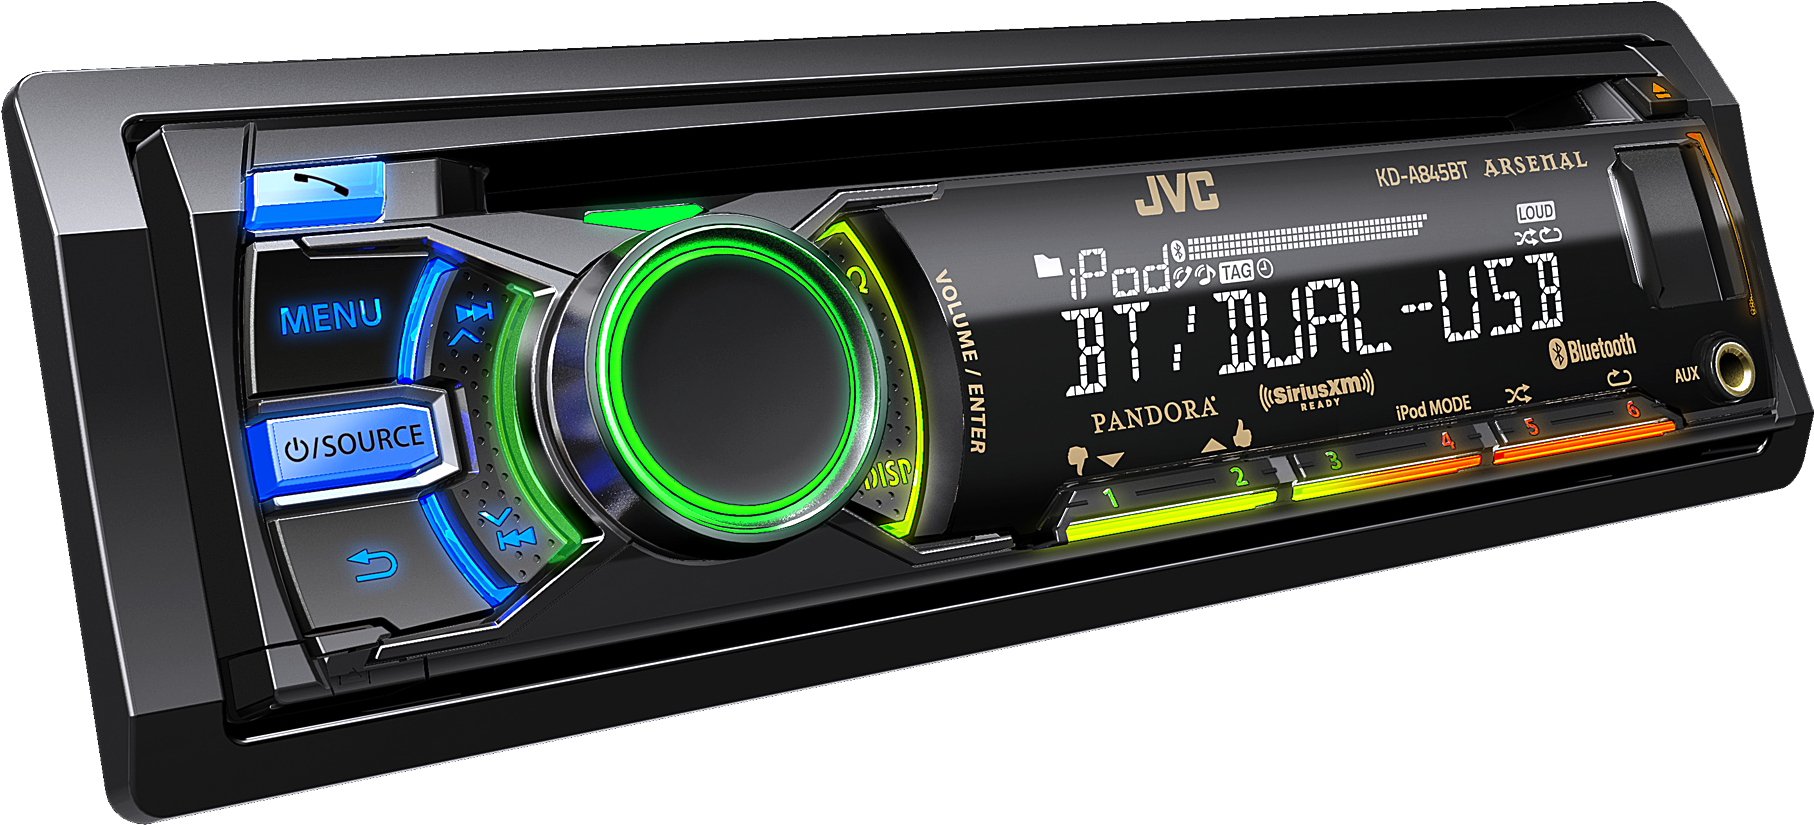 Как подобрать автомагнитолу. Магнитола Sony JVC. Магнитола JVC 1 din. Автомагнитофон Пионер 1210. Магнитола car stereo.